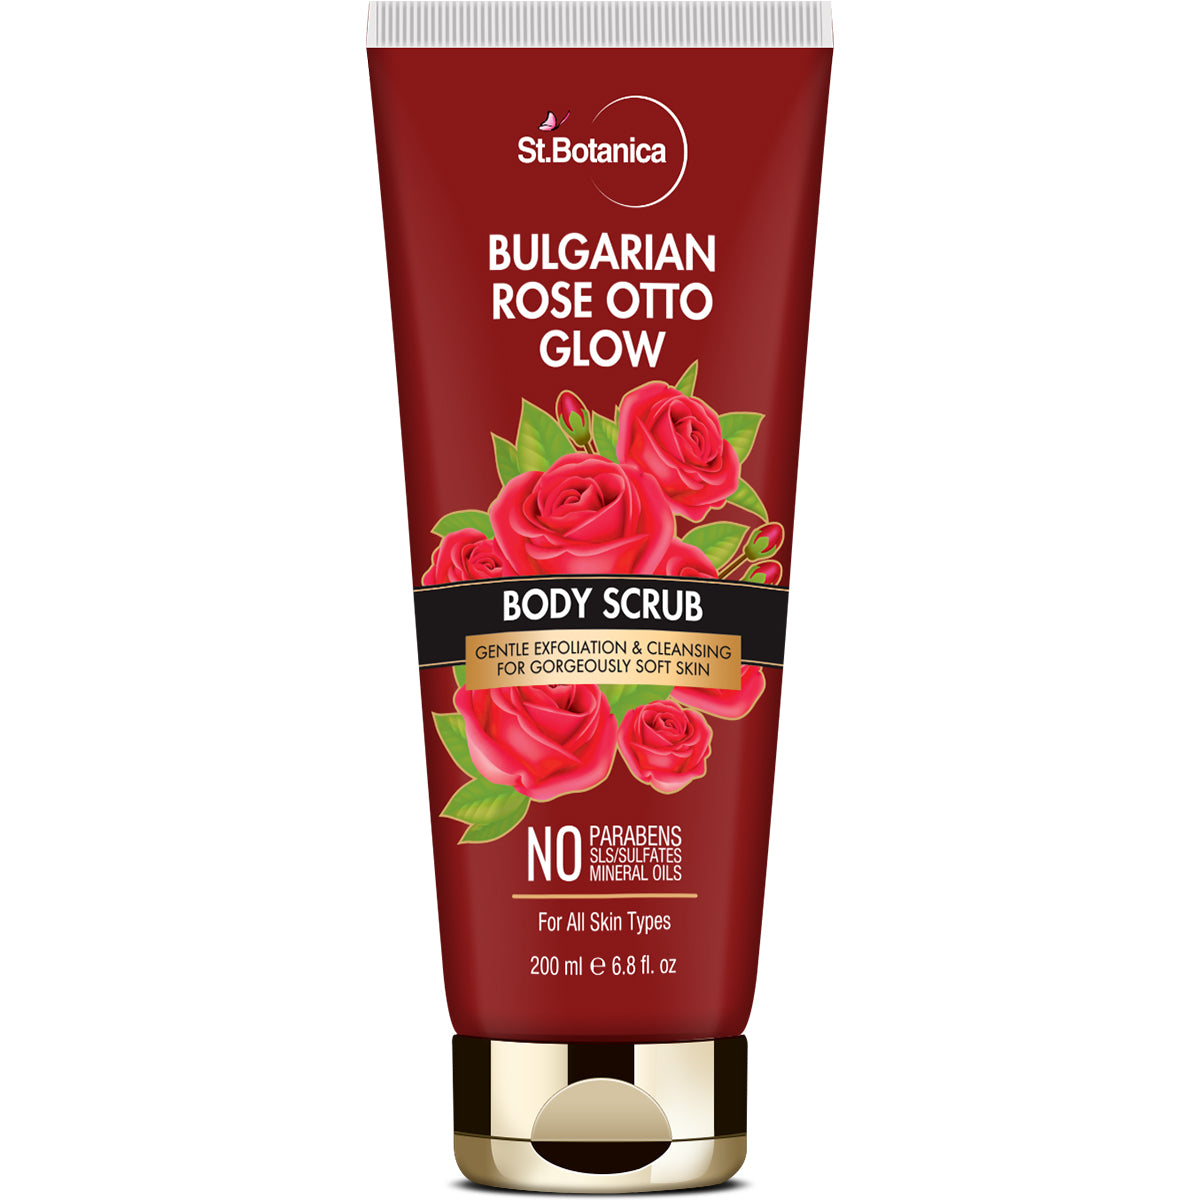 St.Botanica Bulgarian Rose Otto Glow Body Scrub Gentle Exfoliation & Cleansing For Gorgeously Soft Skin, No Paraben & SLS, 200 ml (STBOT681)